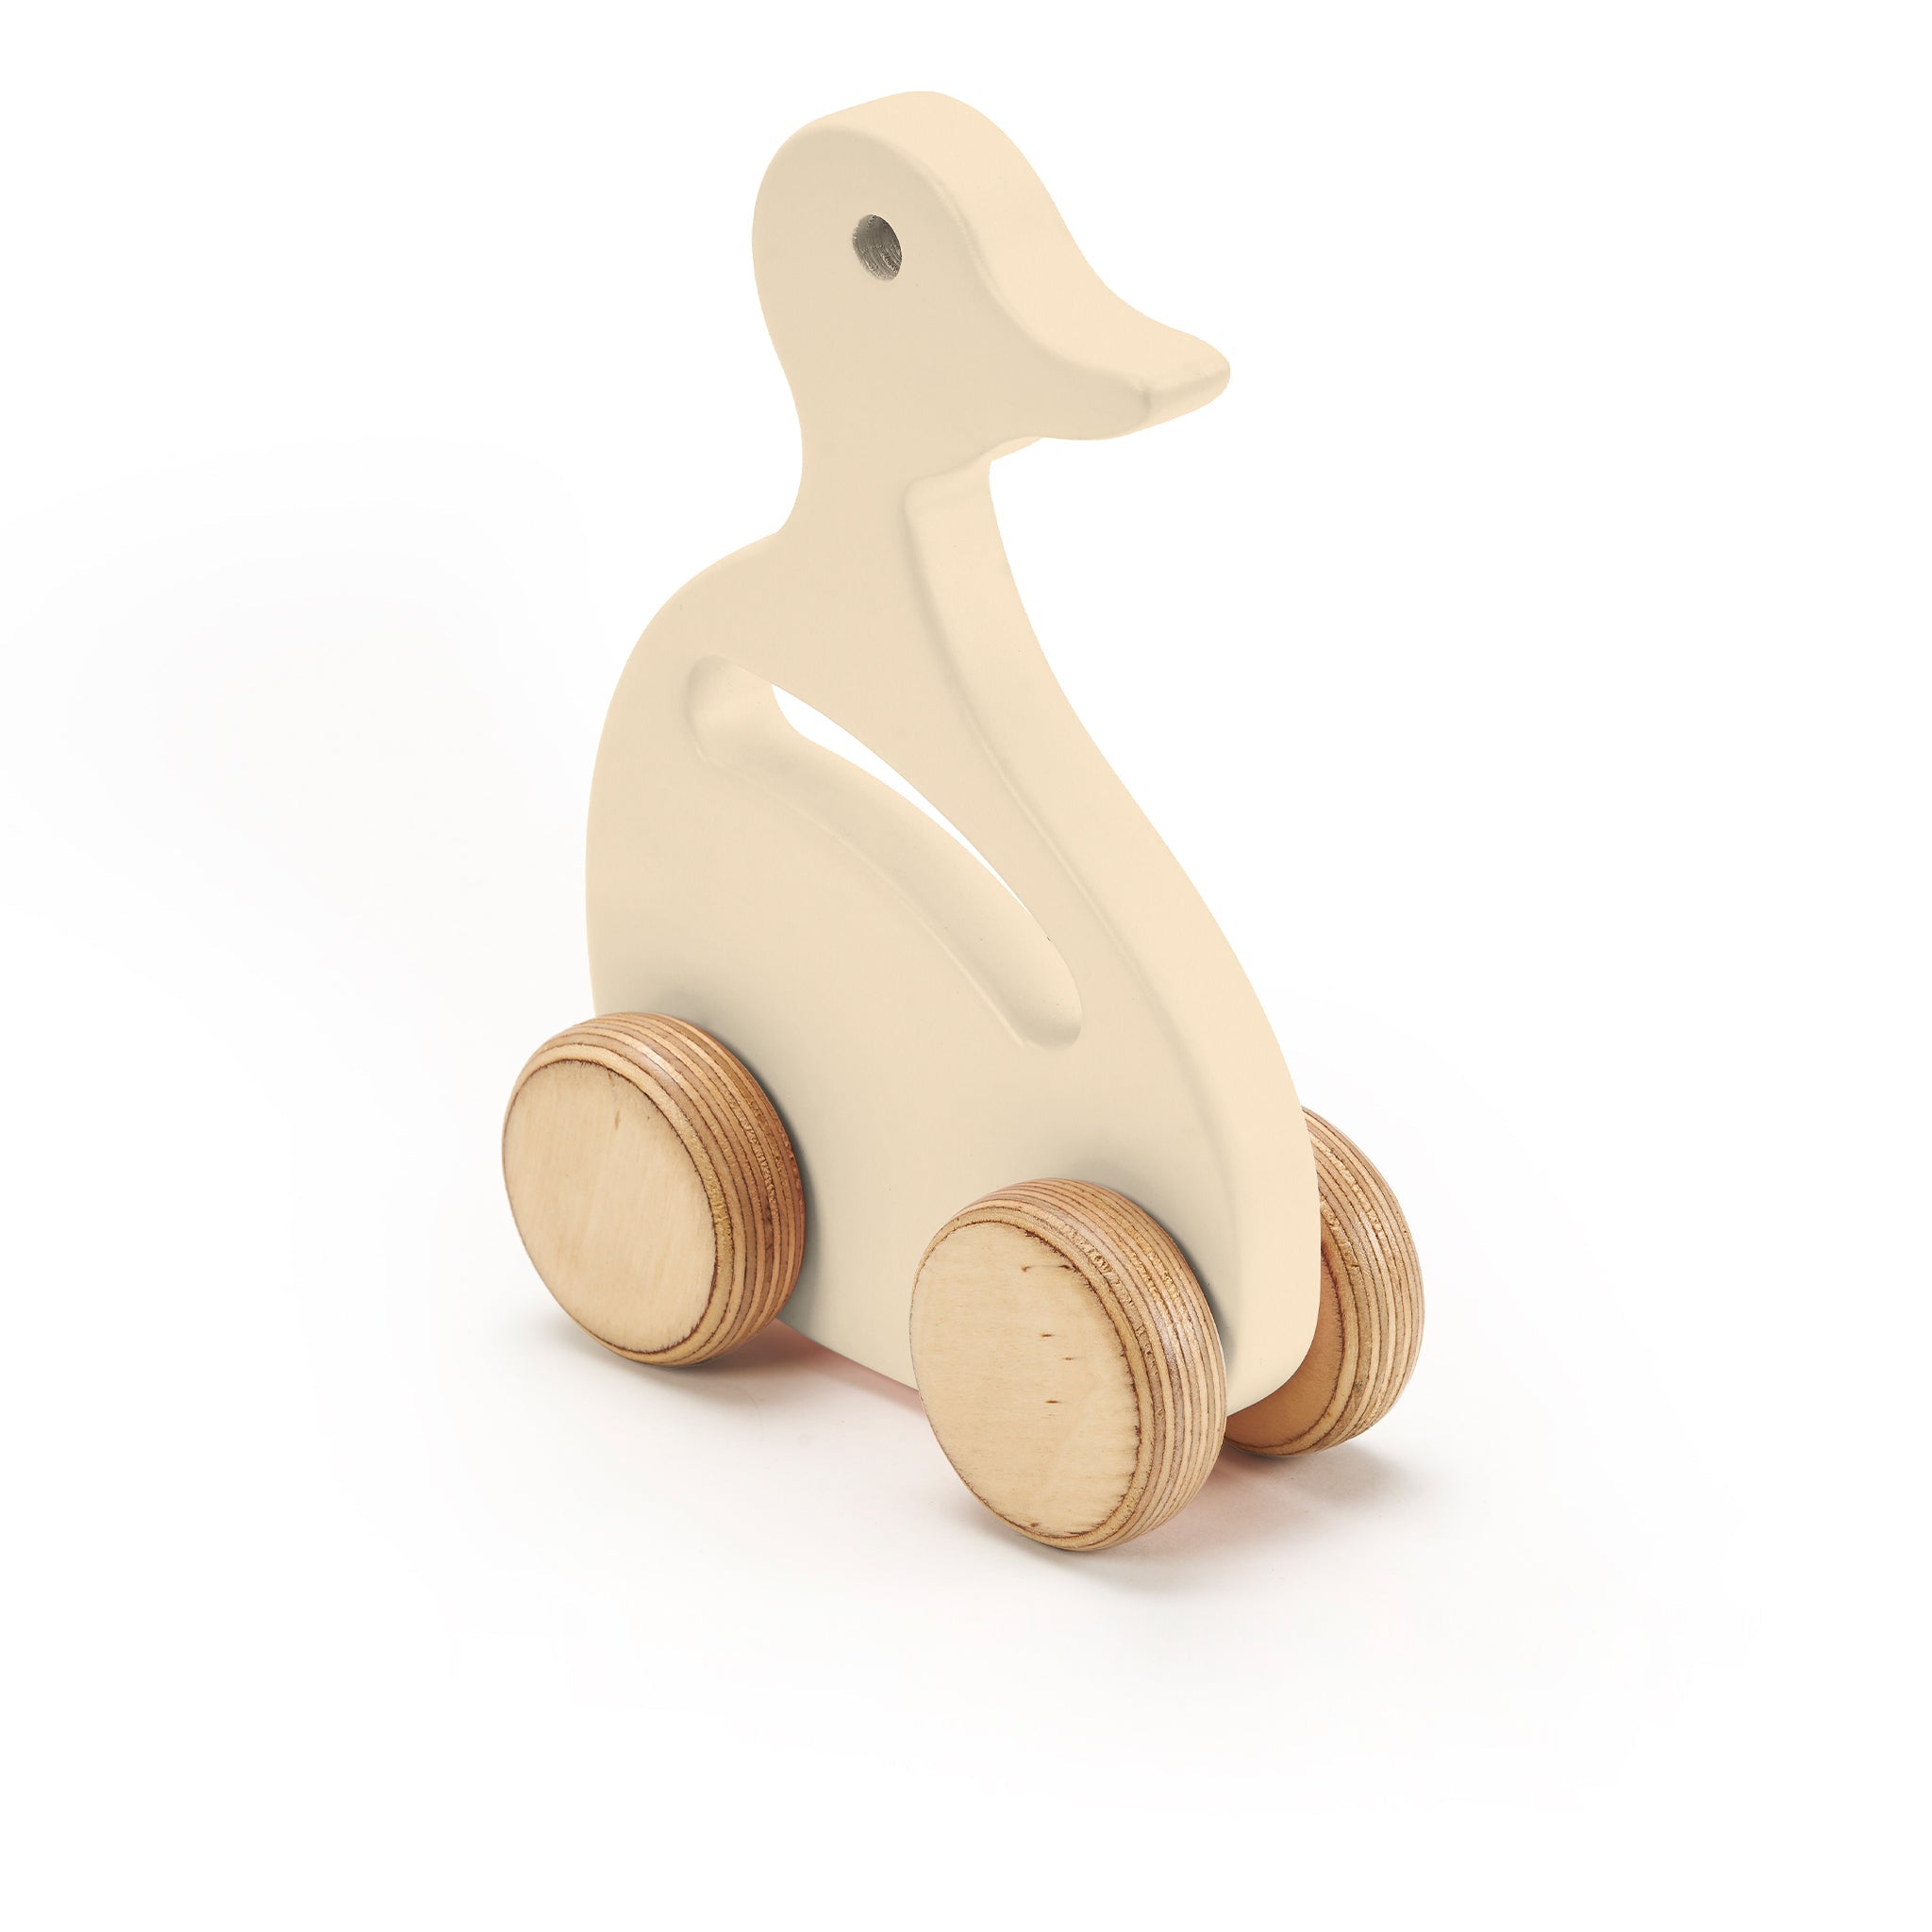 Duck Wheel Wooden Toy